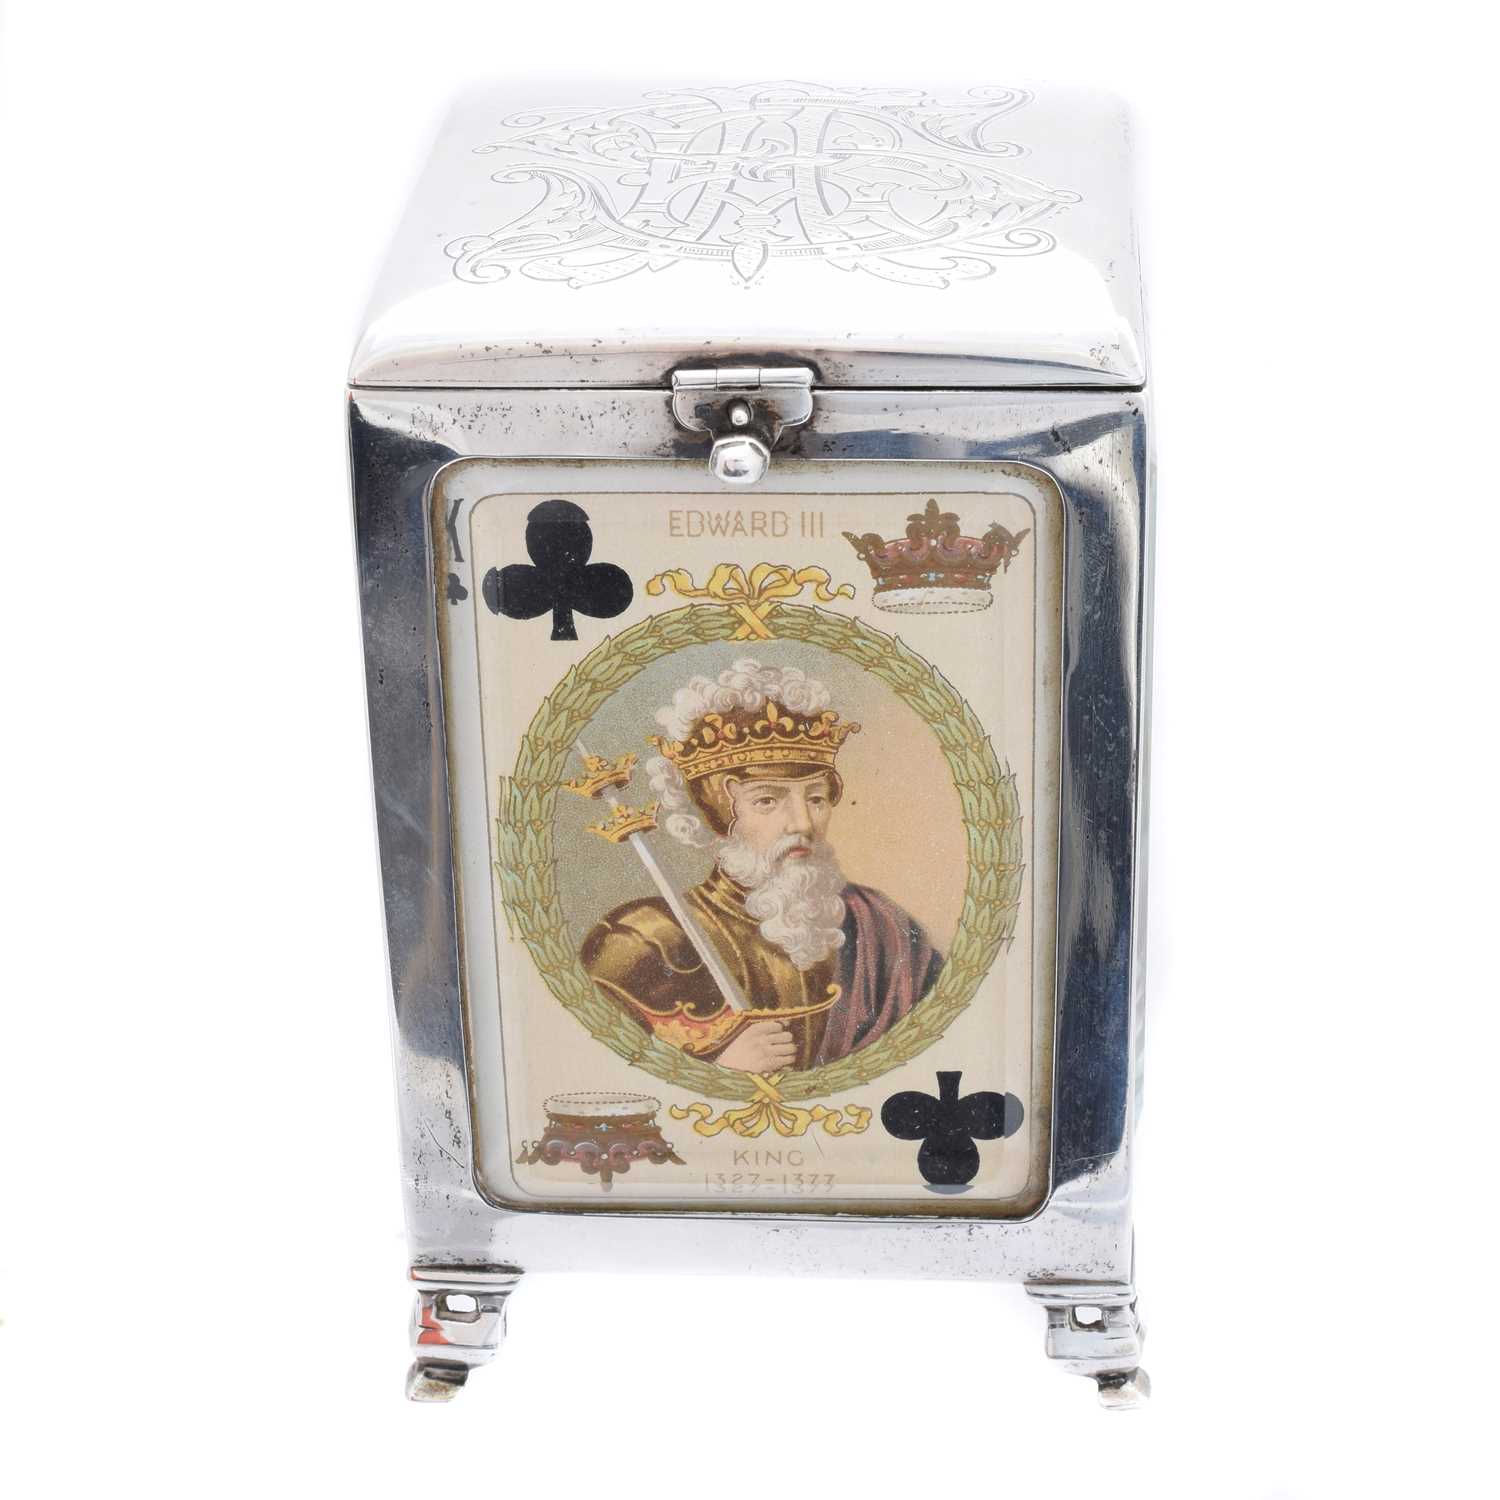 138 - An Edward VII silver playing card holder, 